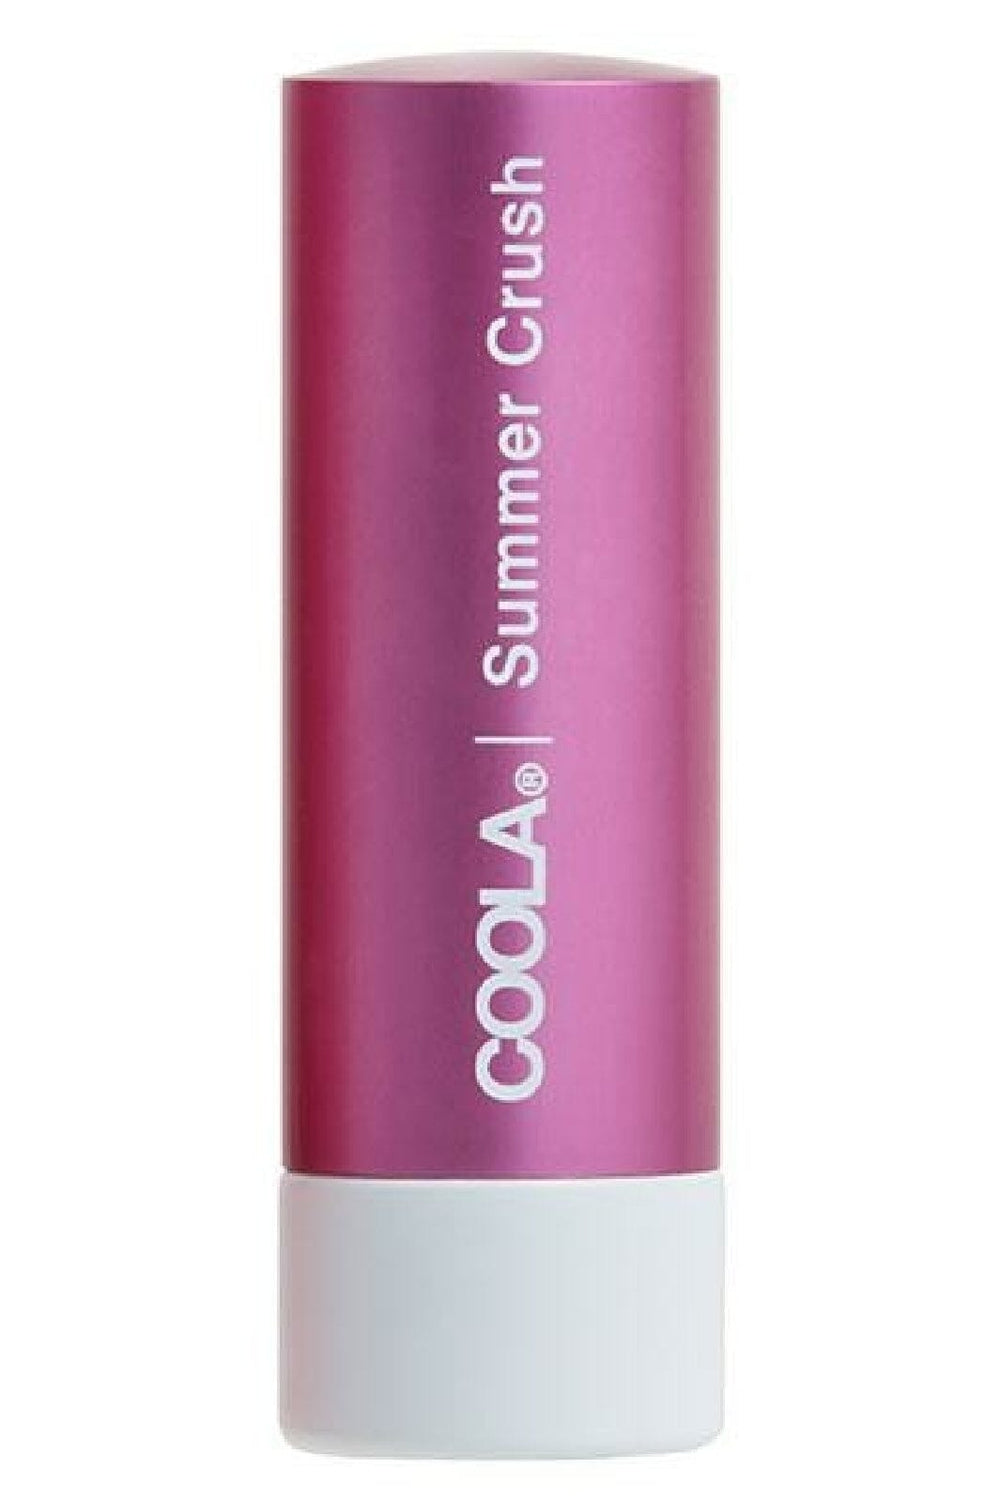 Coola - Mineral Liplux Tinted Lip Balm SPF 30 - Summer Crush (Dark Pink) Læbepleje 